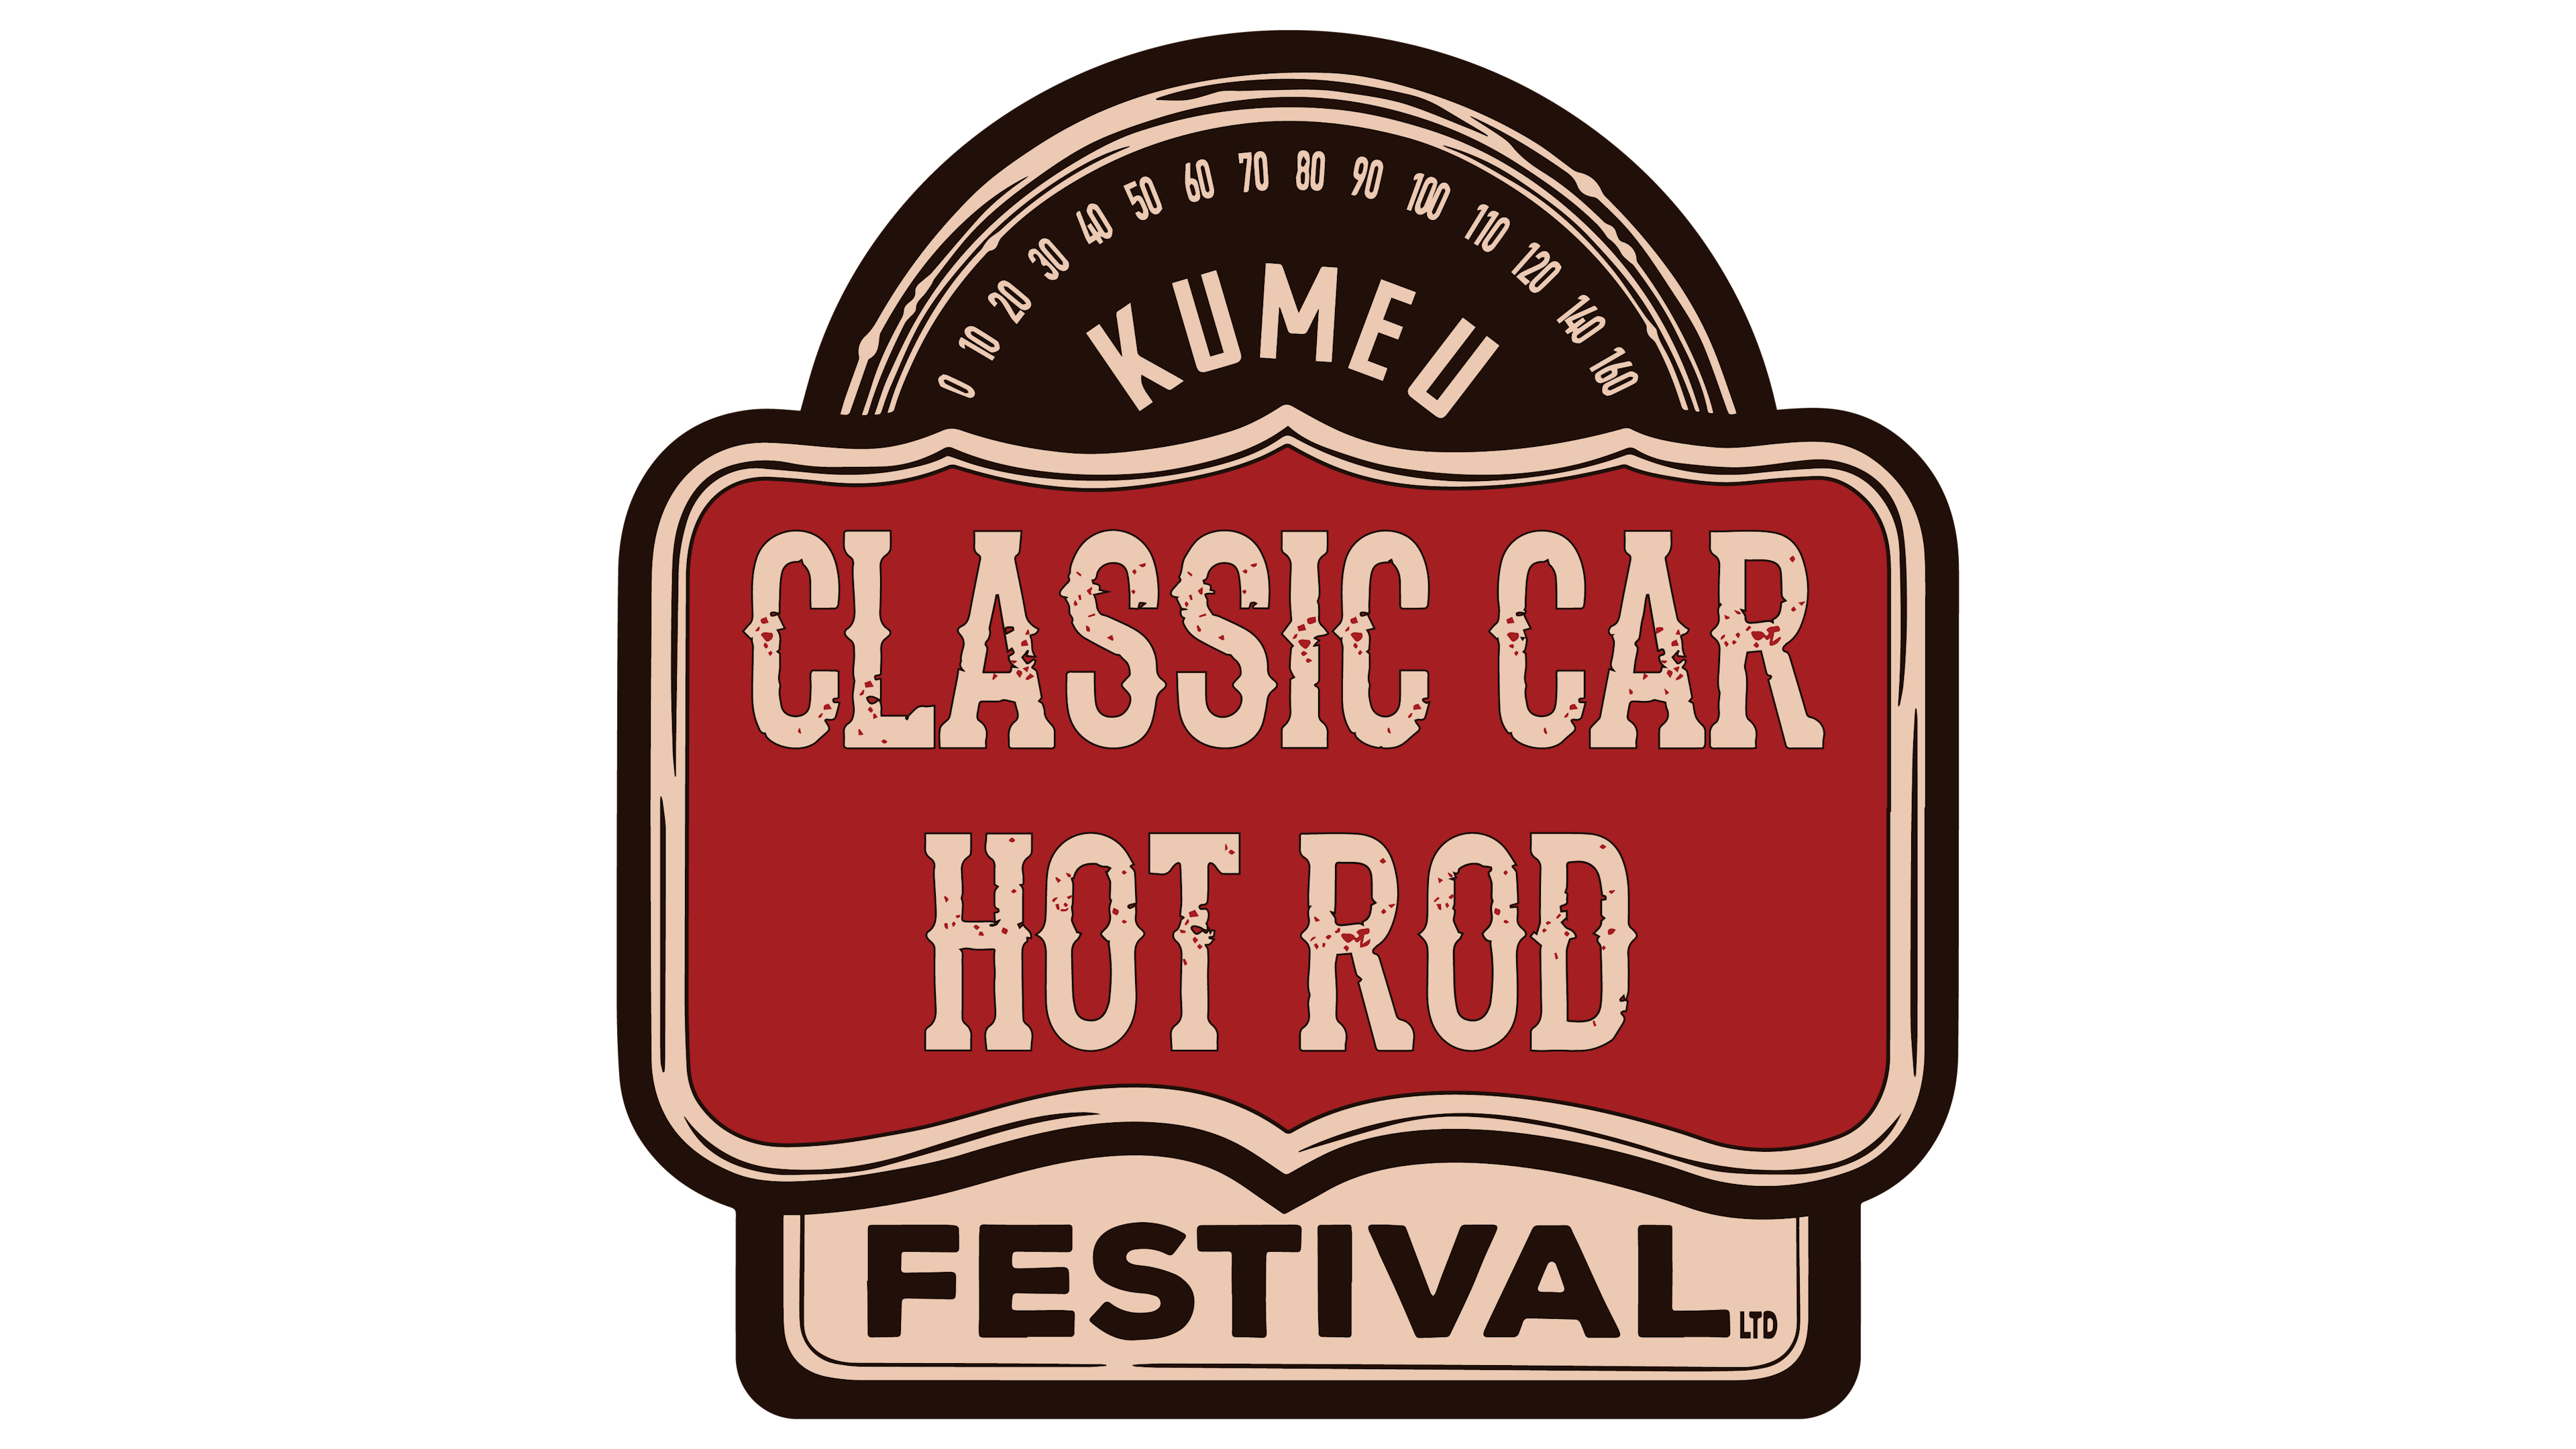 Kumeu Classic Car & Hot Rod Festival Limited logo